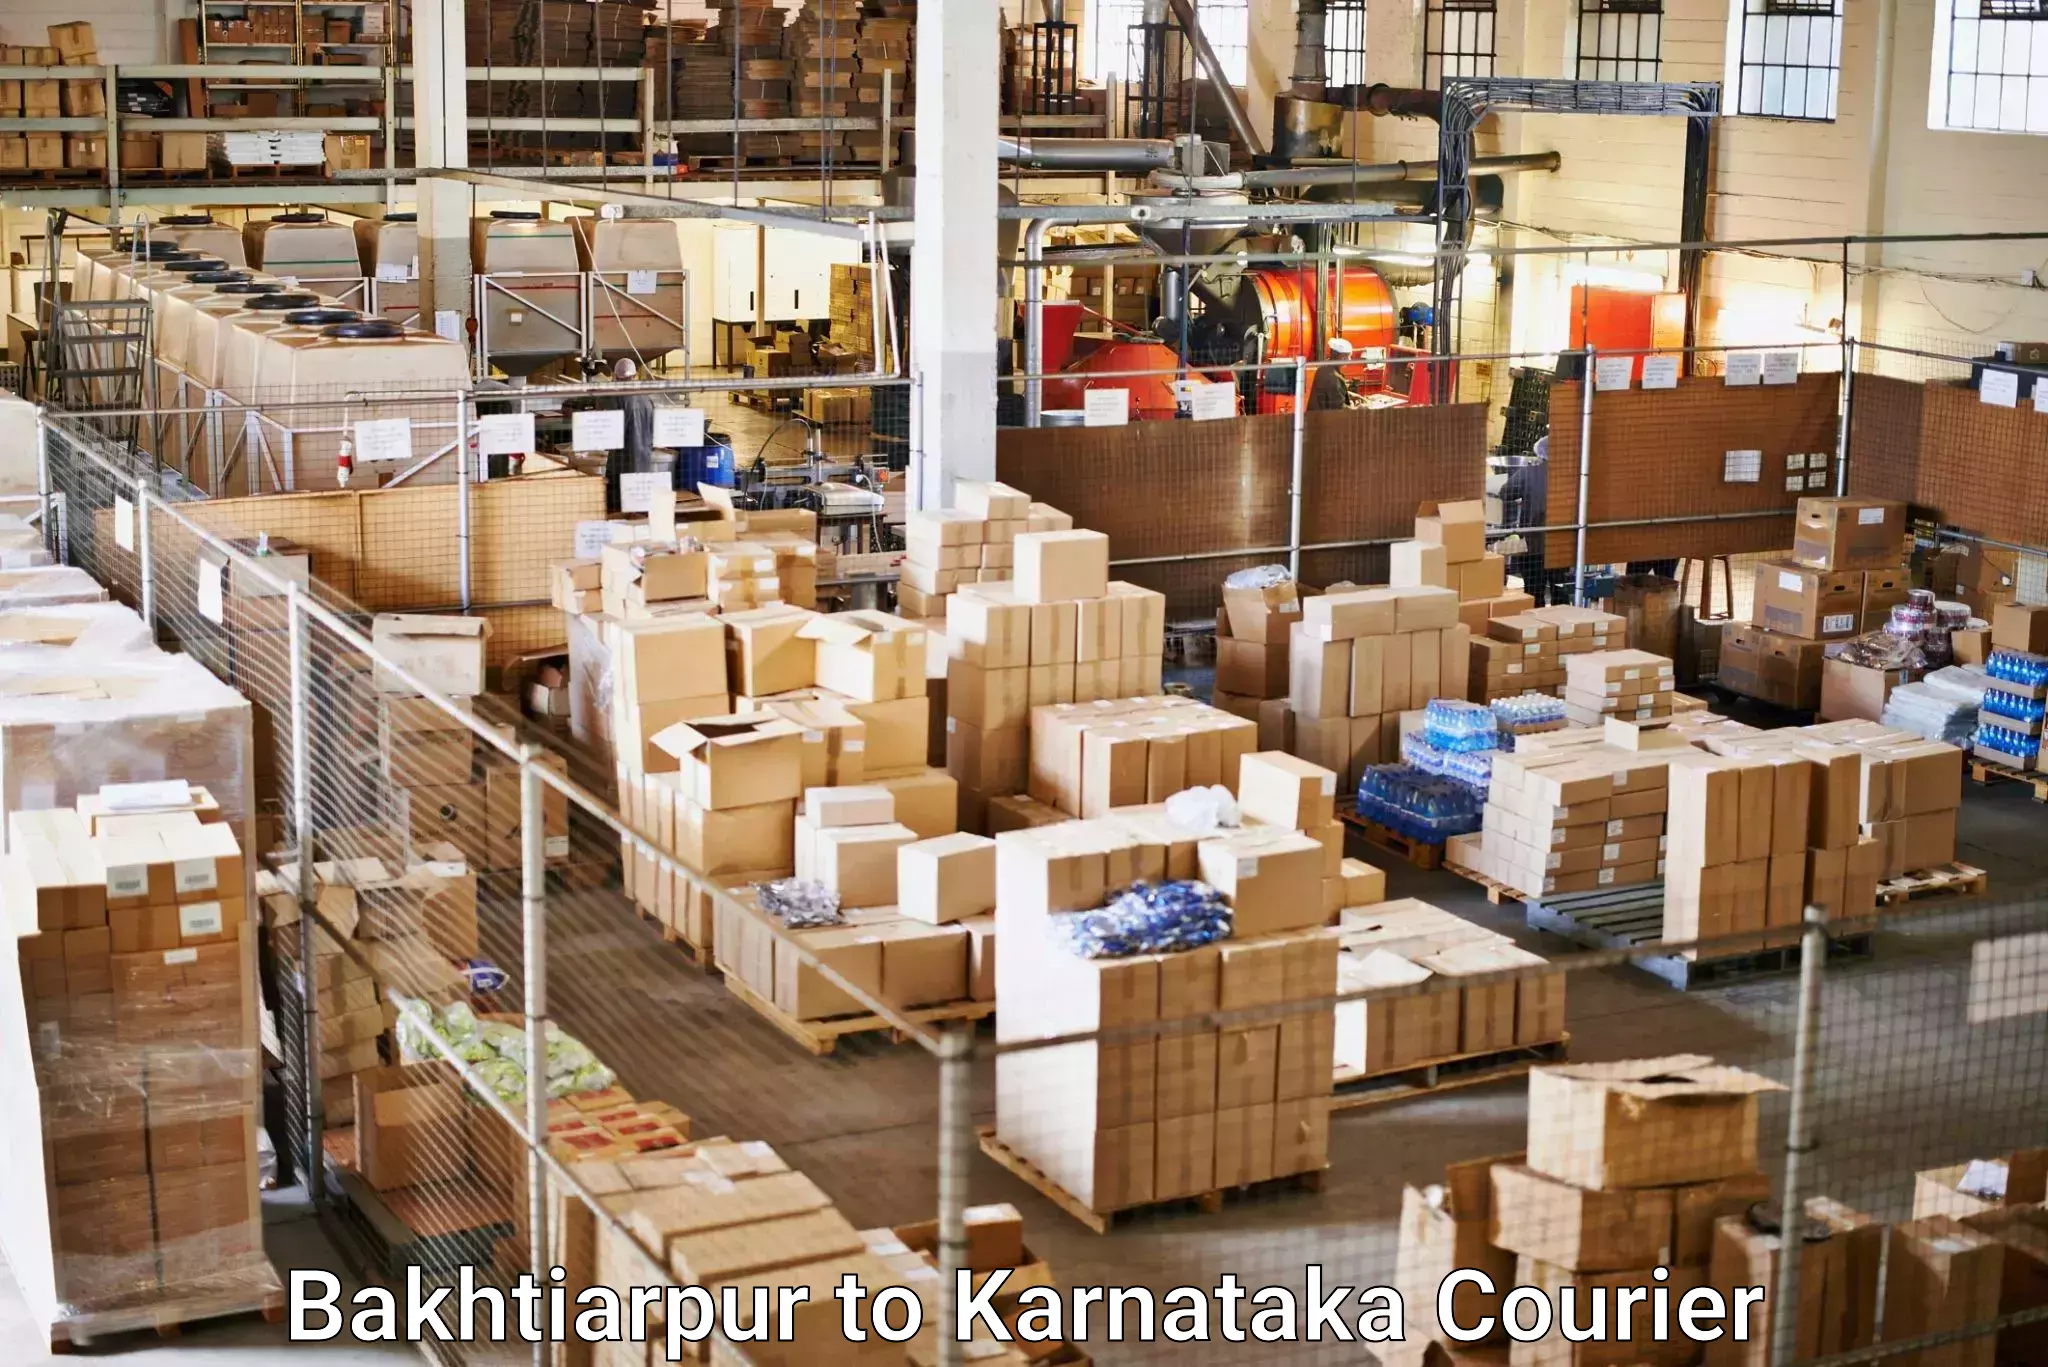 Business delivery service Bakhtiarpur to Karnataka